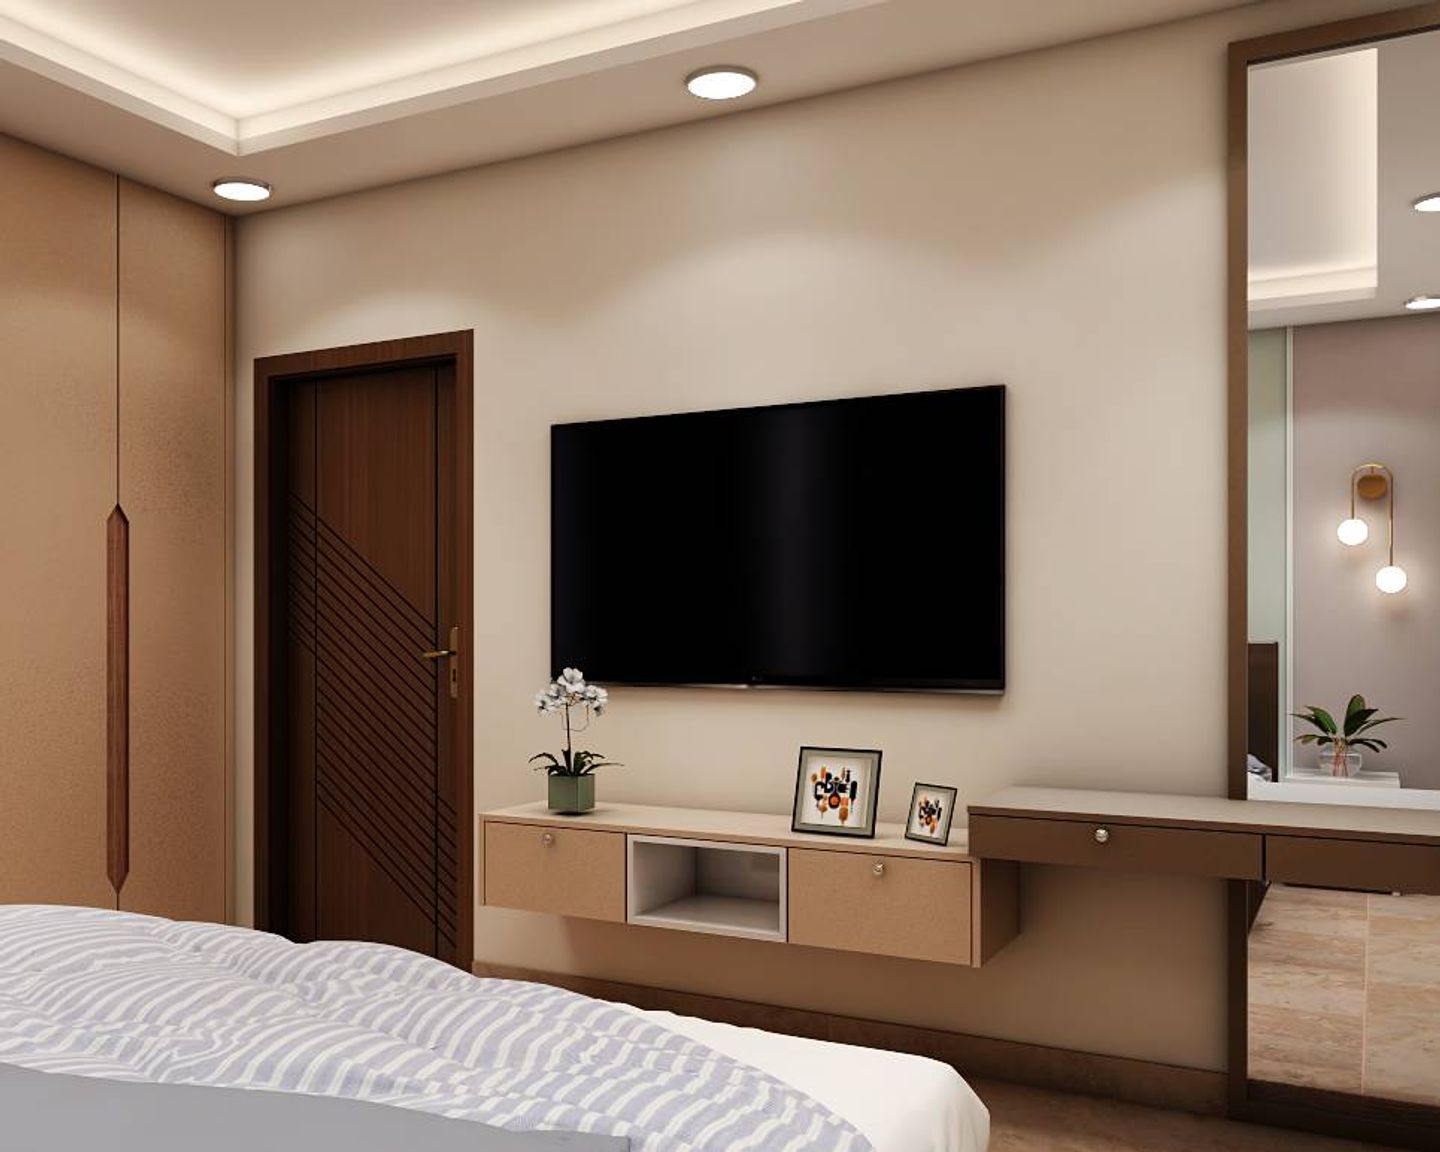 Modern Master Bedroom Design With Warm Lighting